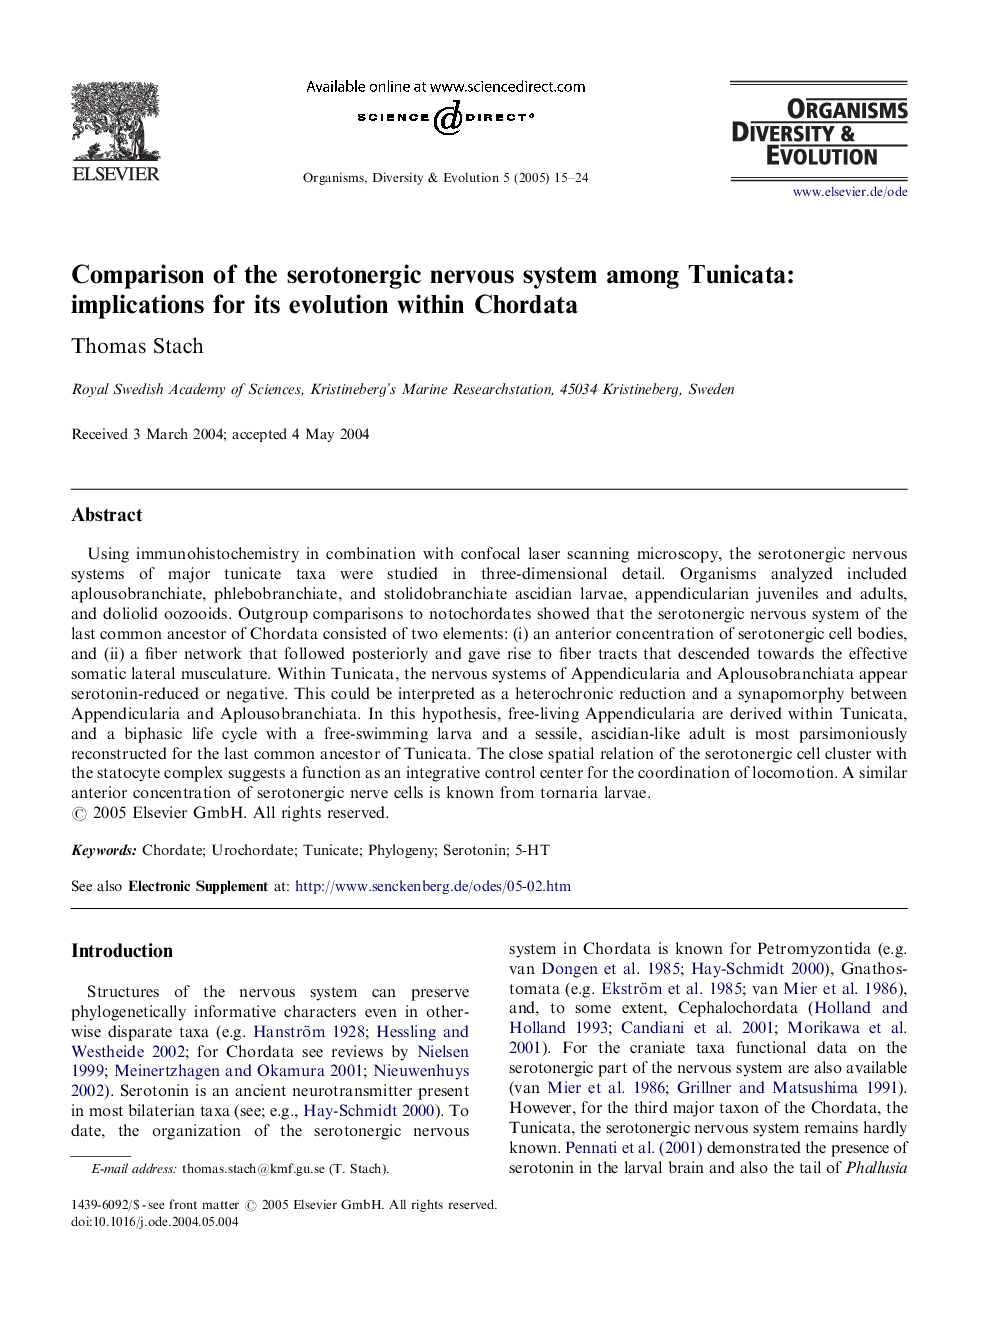 Comparison of the serotonergic nervous system among Tunicata: implications for its evolution within Chordata